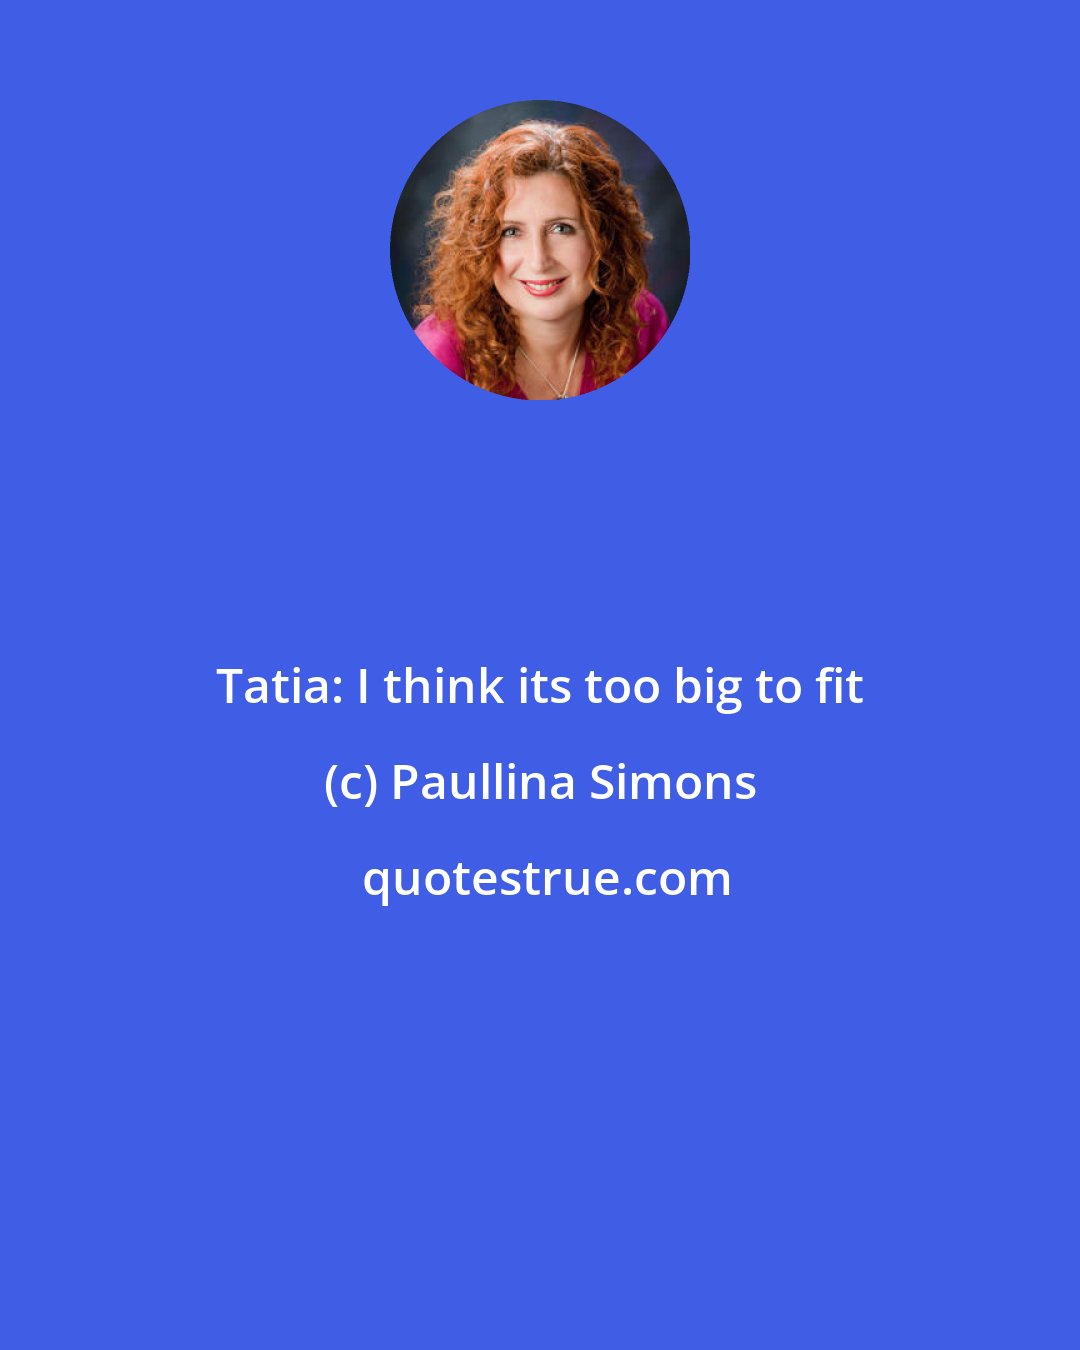 Paullina Simons: Tatia: I think its too big to fit